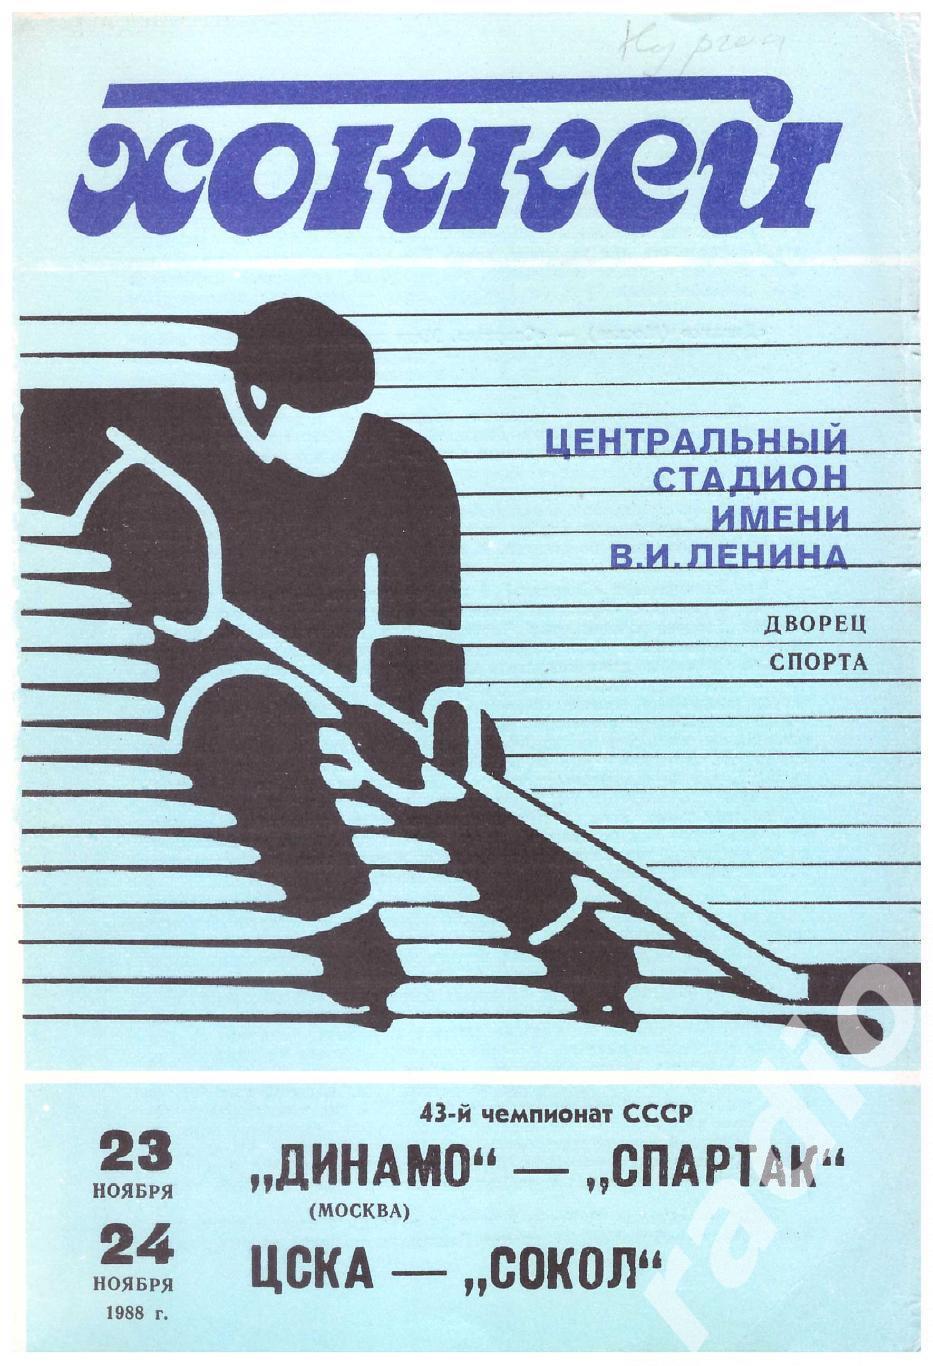 1988-11-23 Динамо Москва - Спартак 11-24 ЦСКА - Сокол Киев